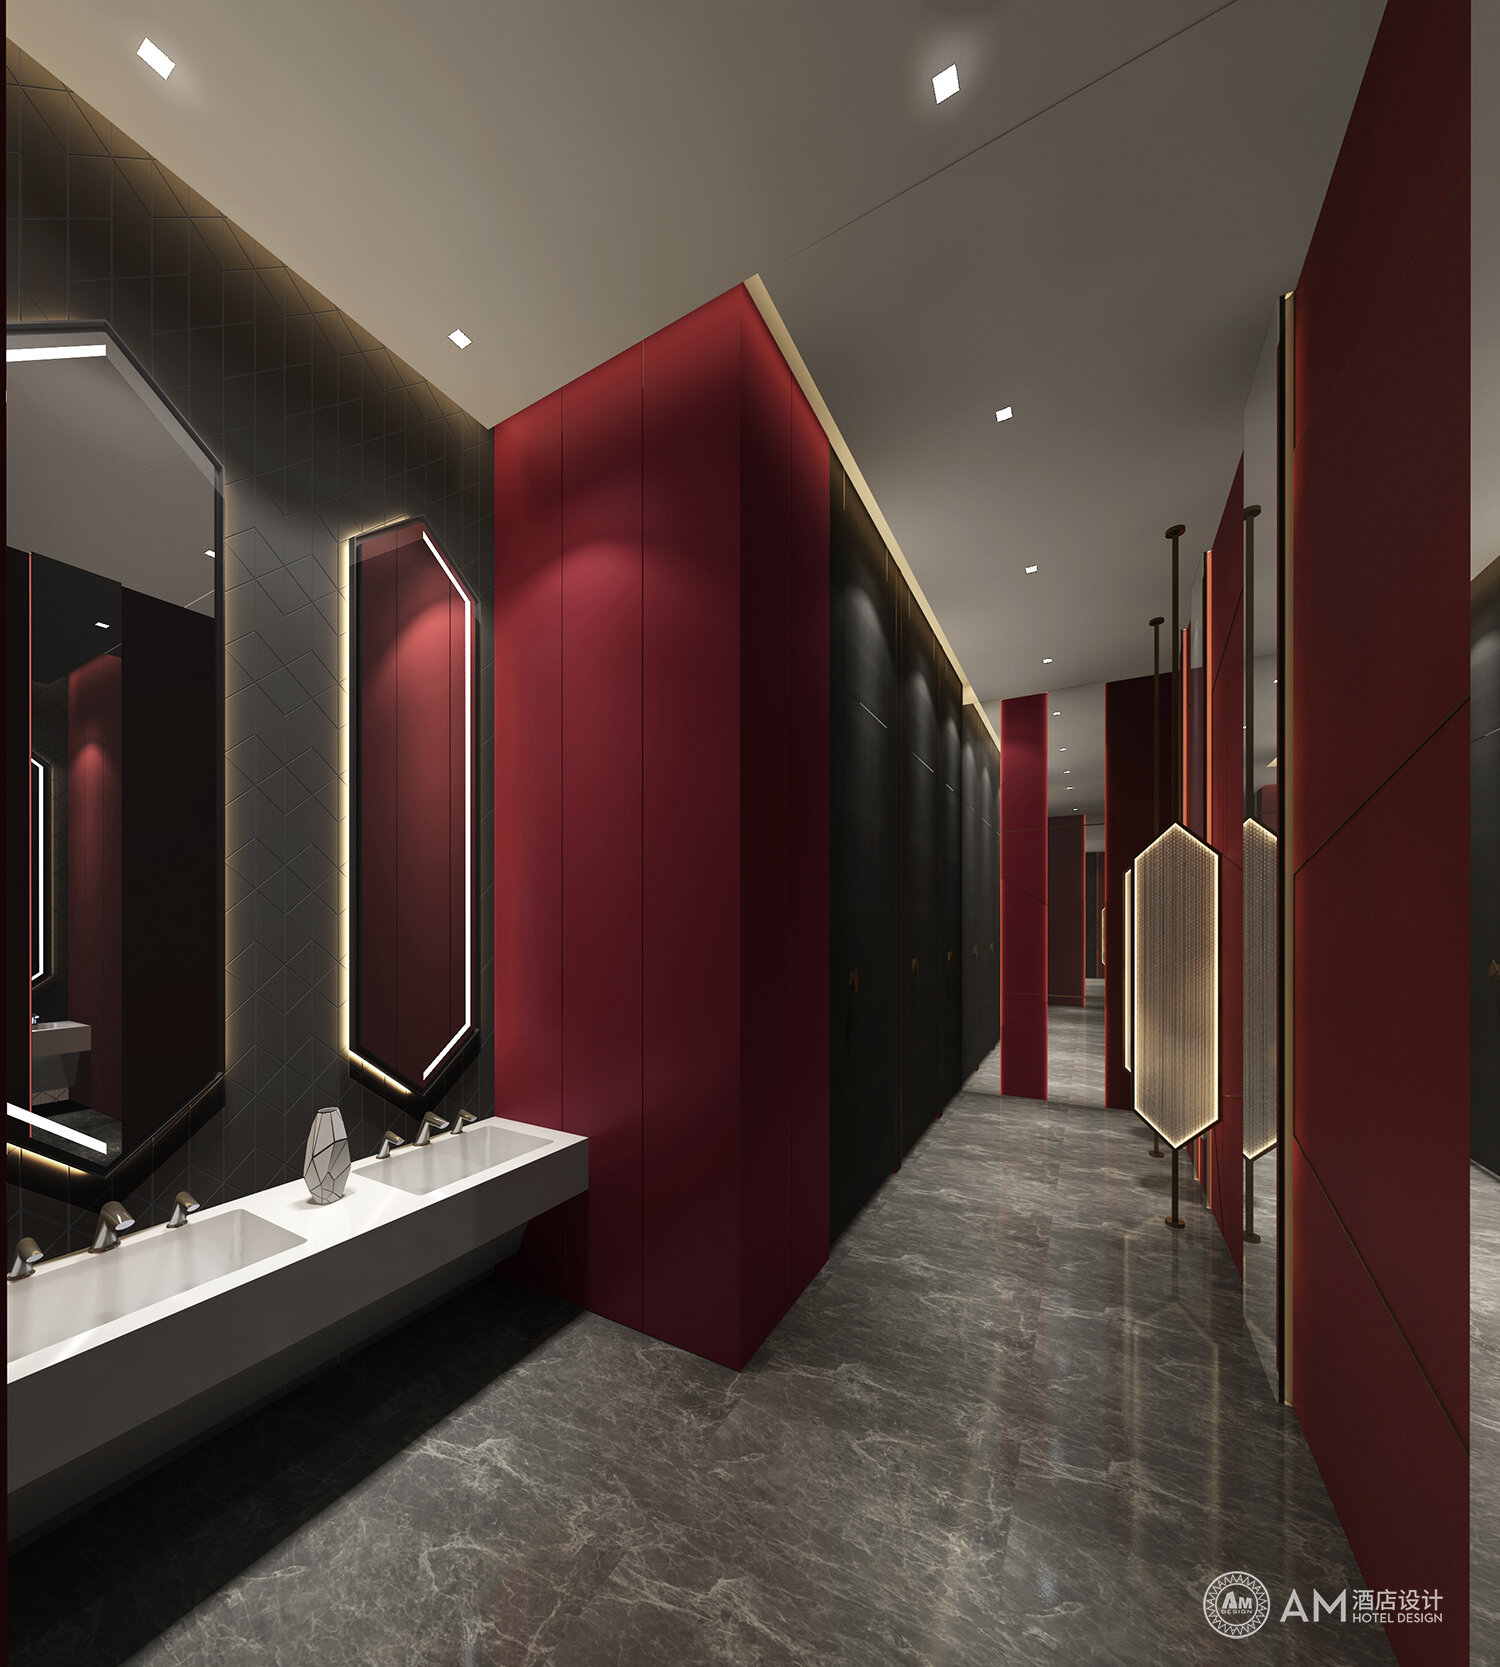 AM DESIGN | Jinpan hotel toilet Design